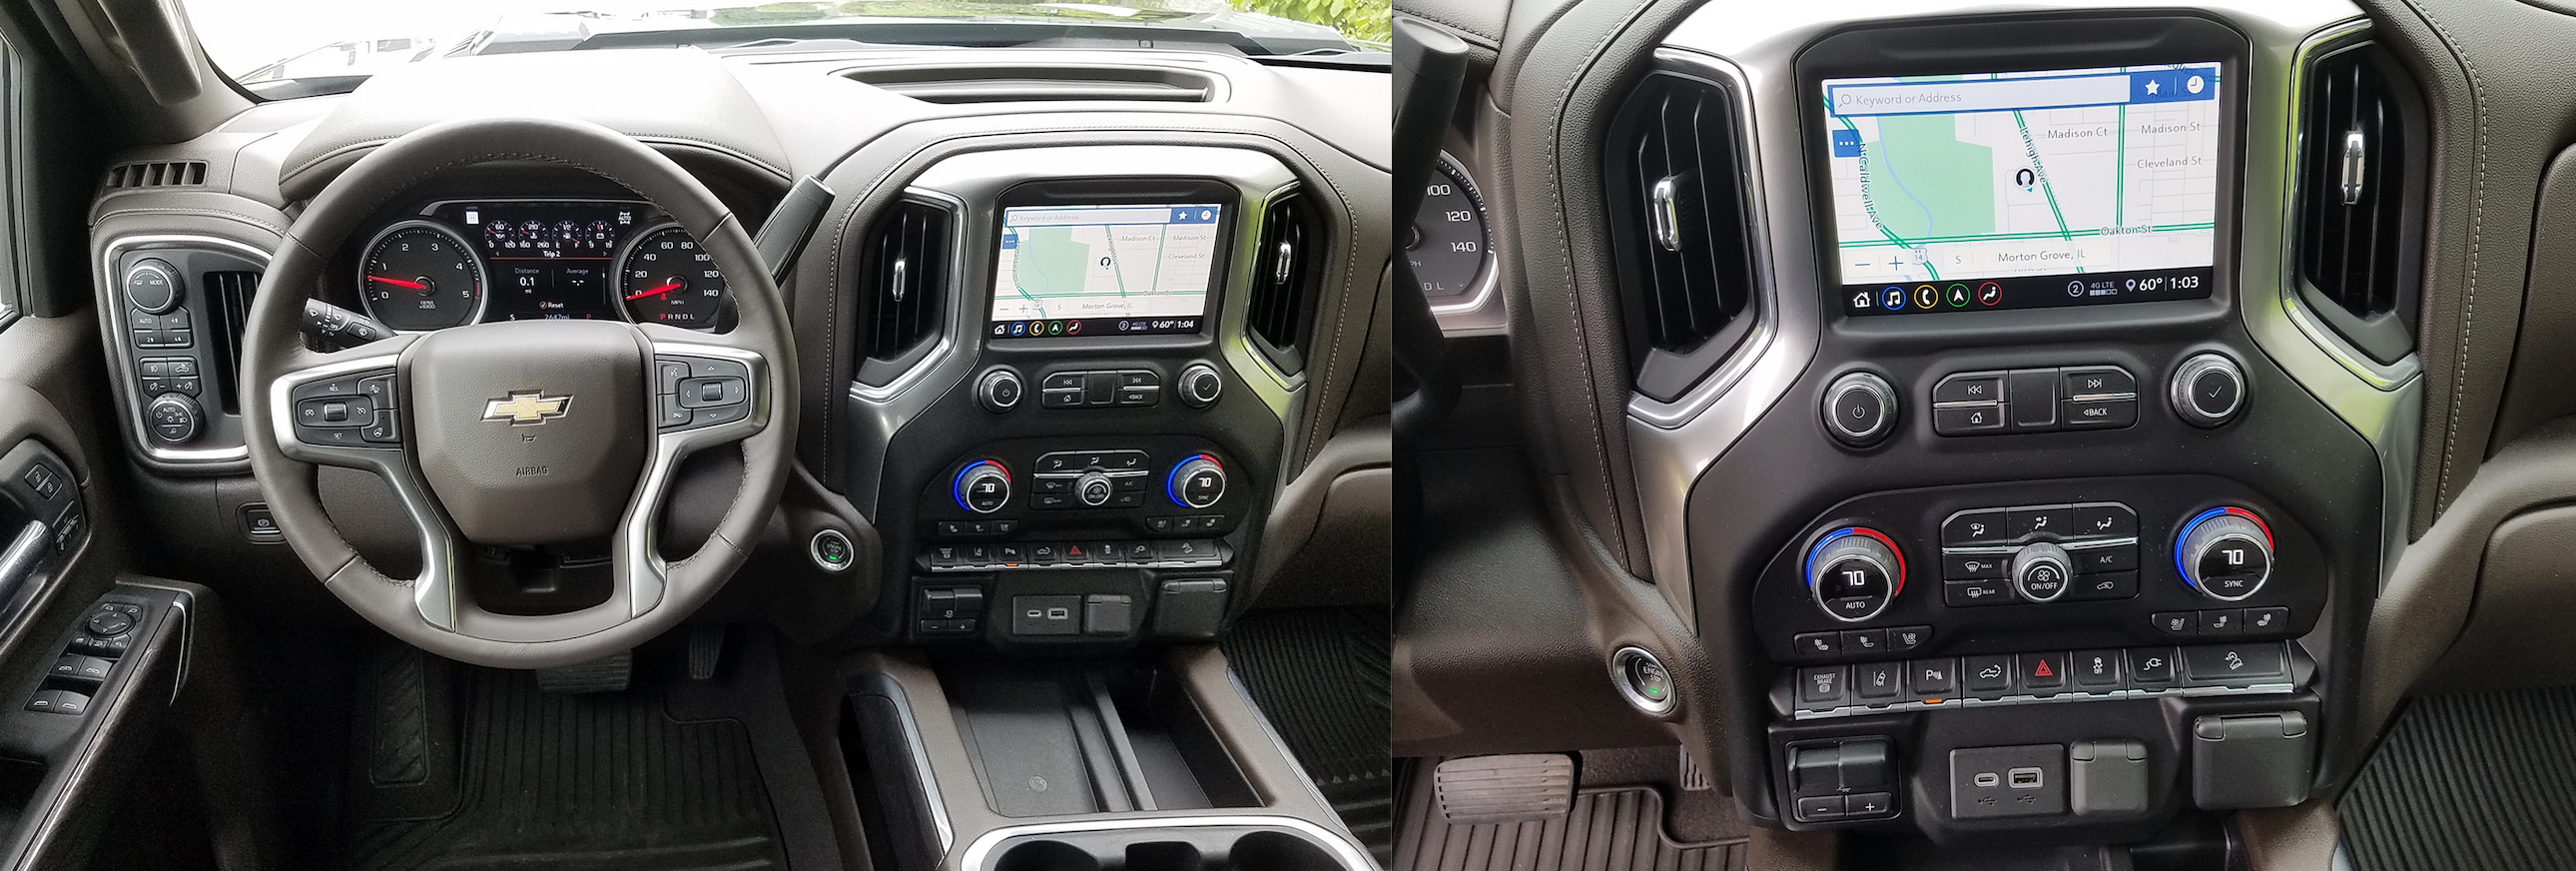 Test Drive: 2020 Chevrolet Silverado 2500 LTZ Duramax